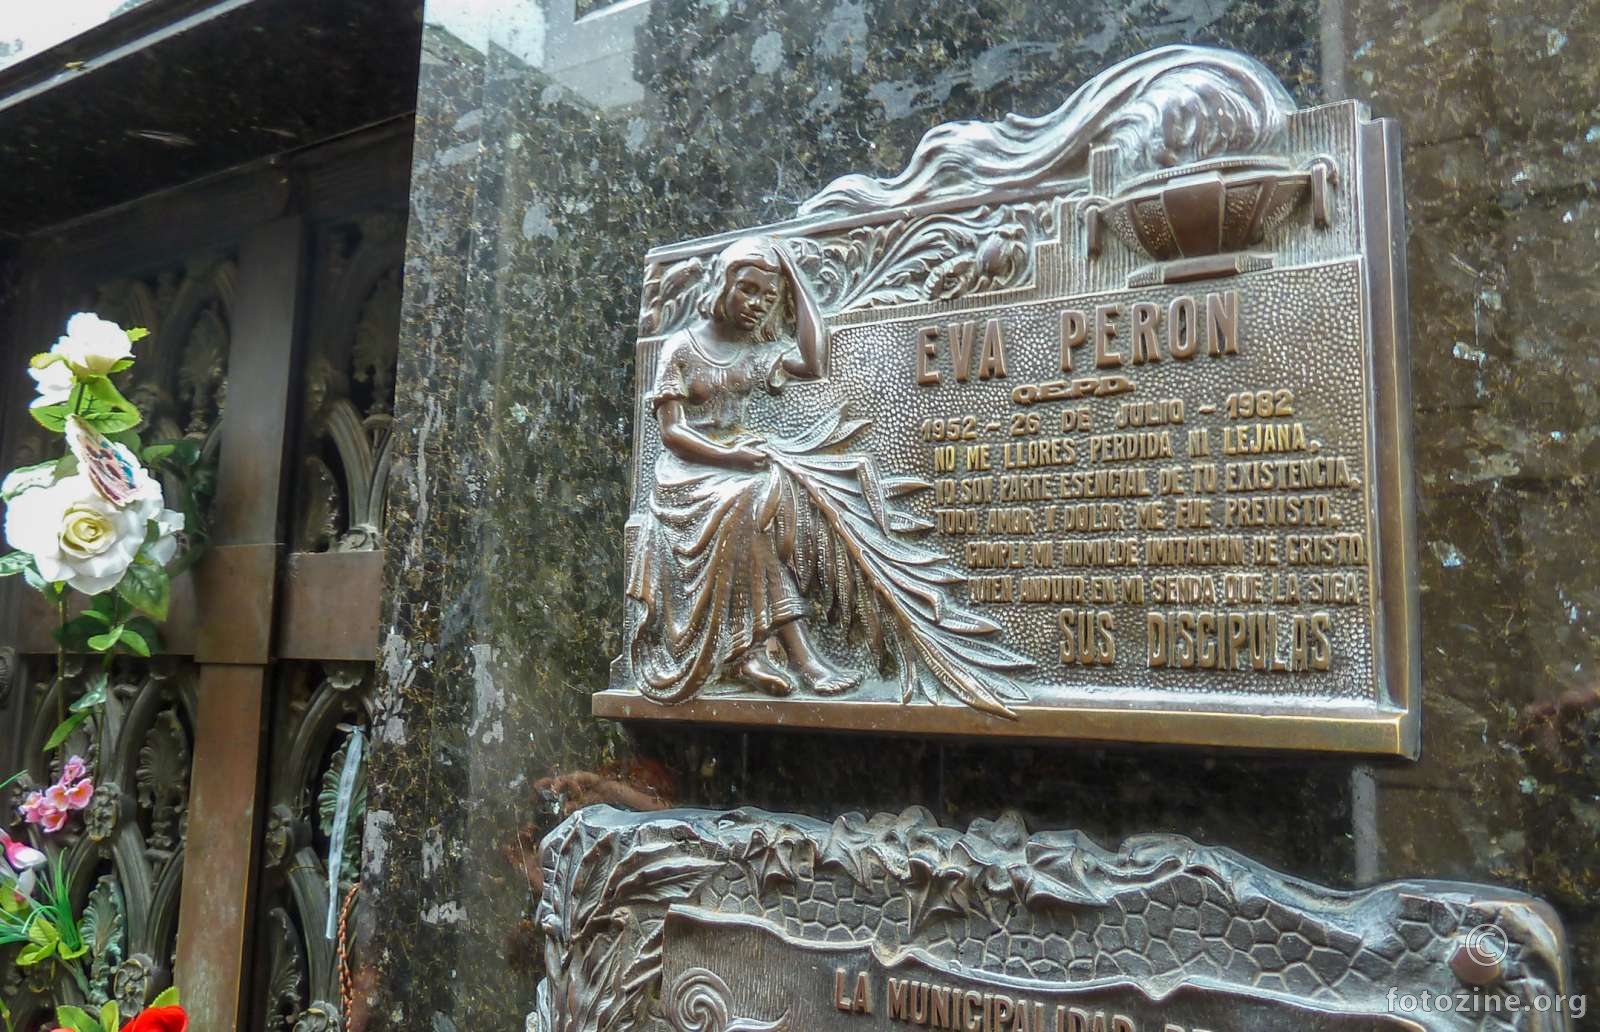 Eva Peron tomb